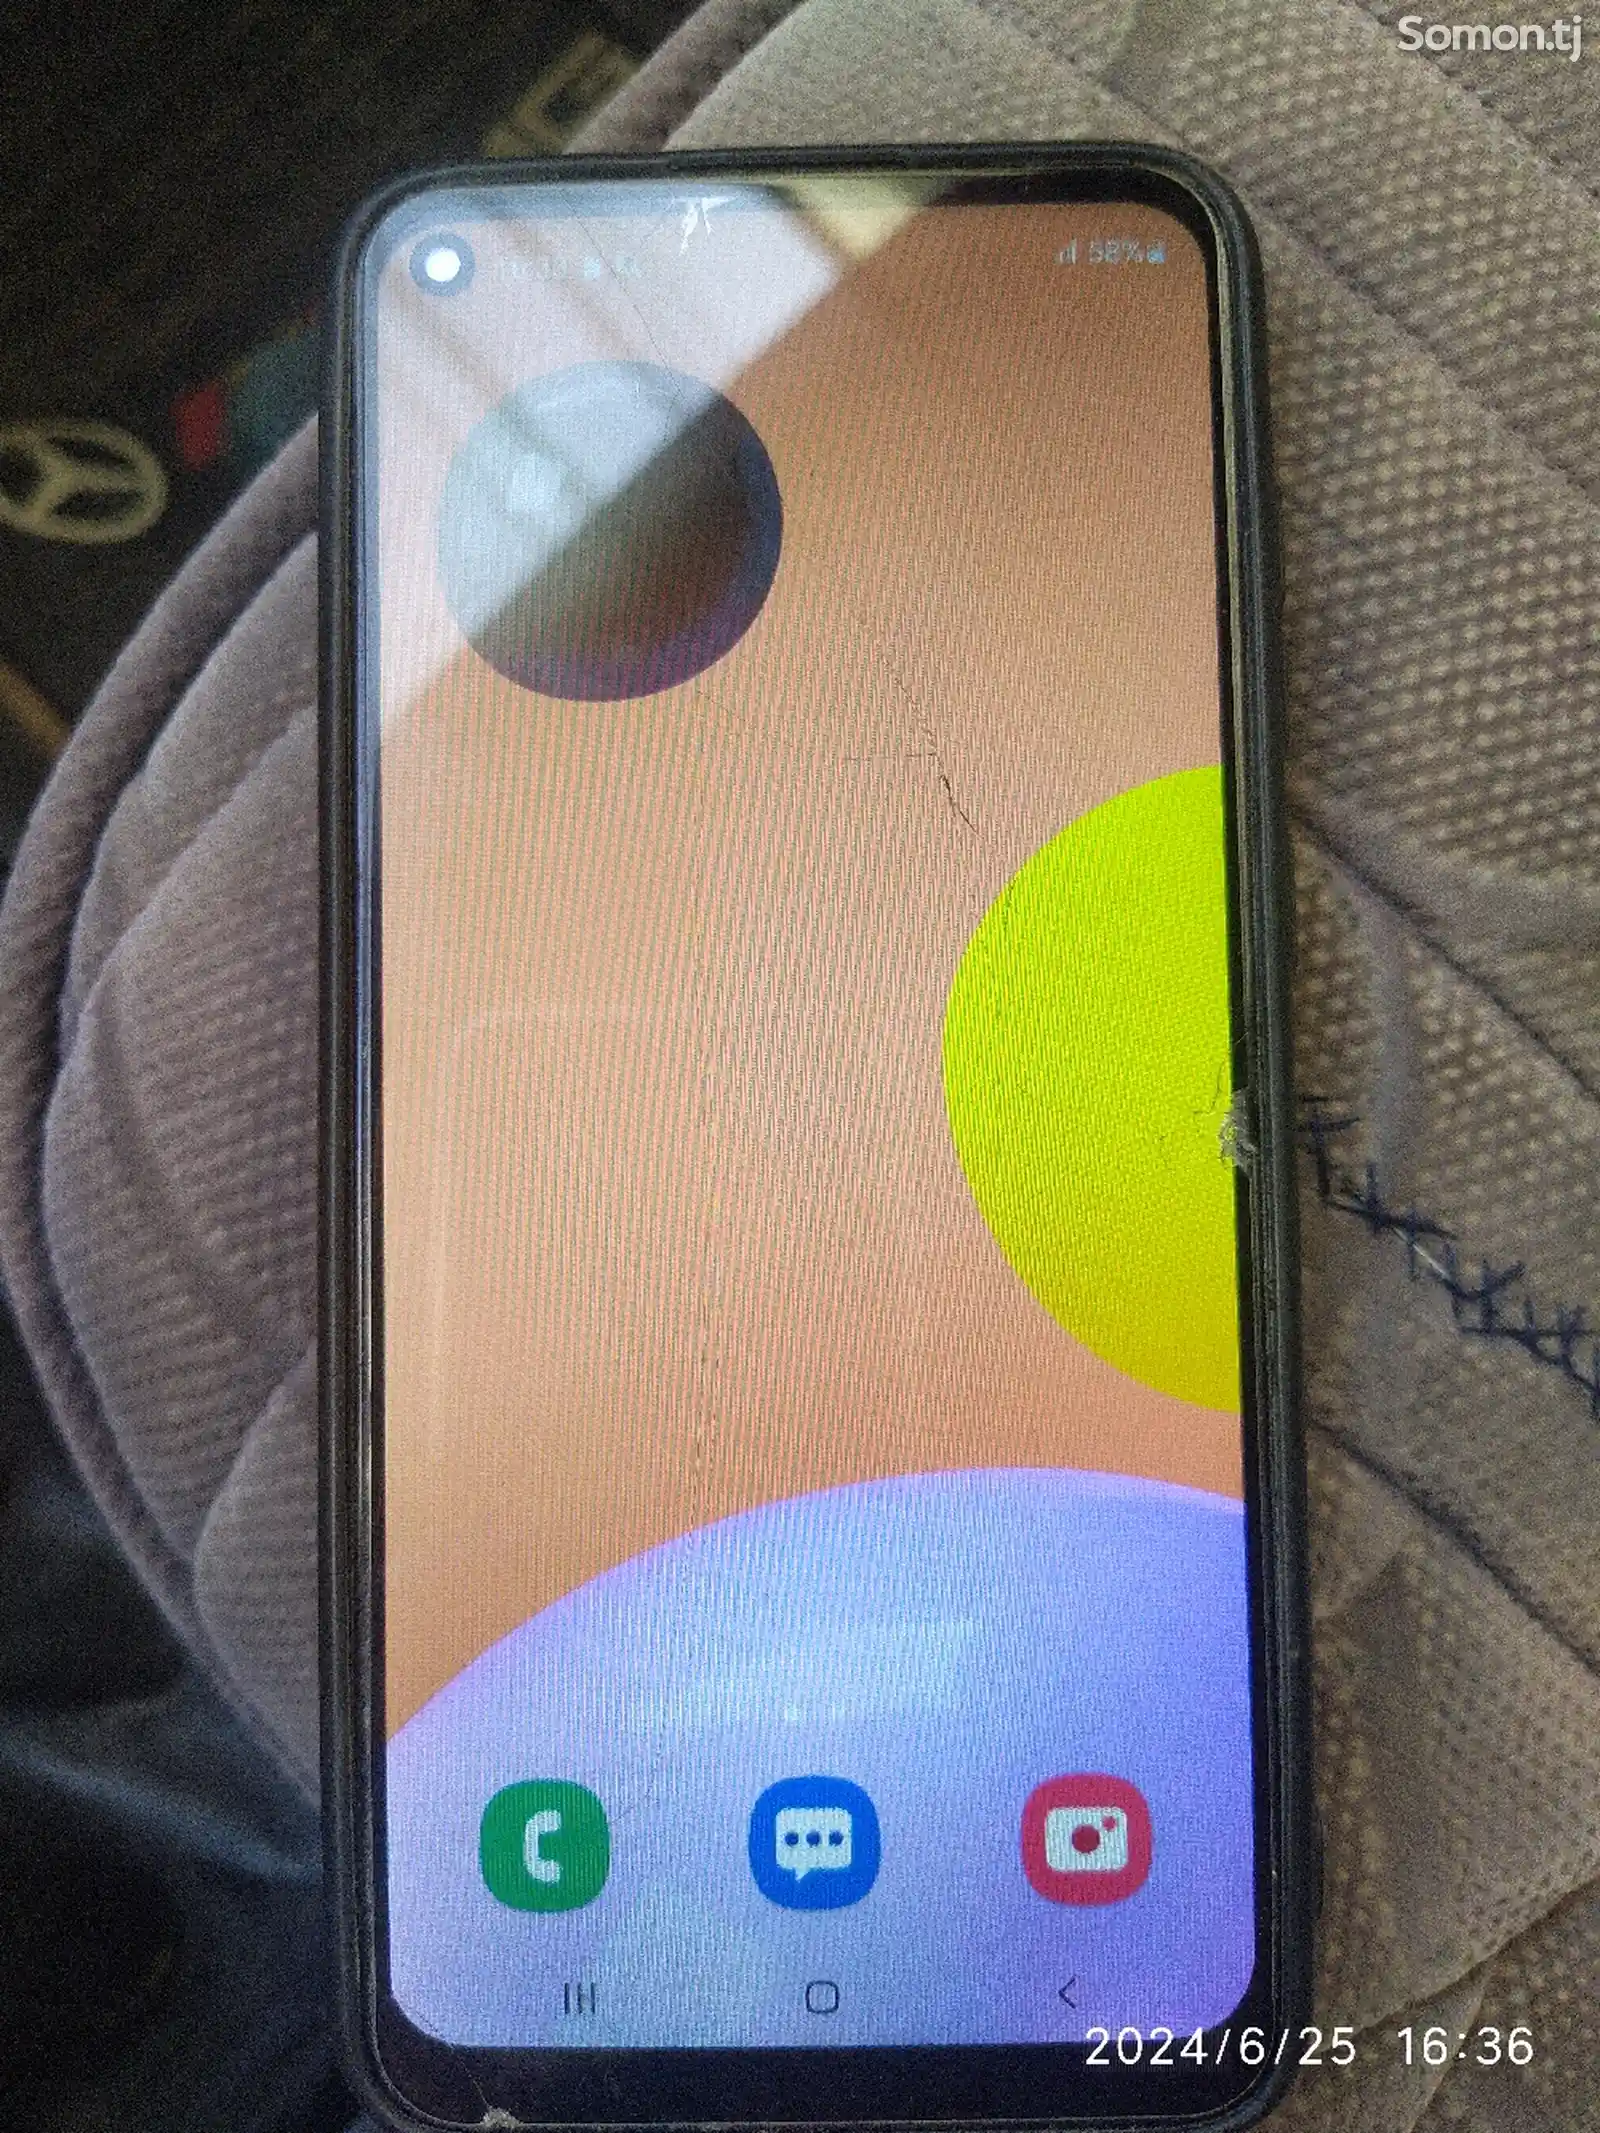 Samsung Galaxy А11-2